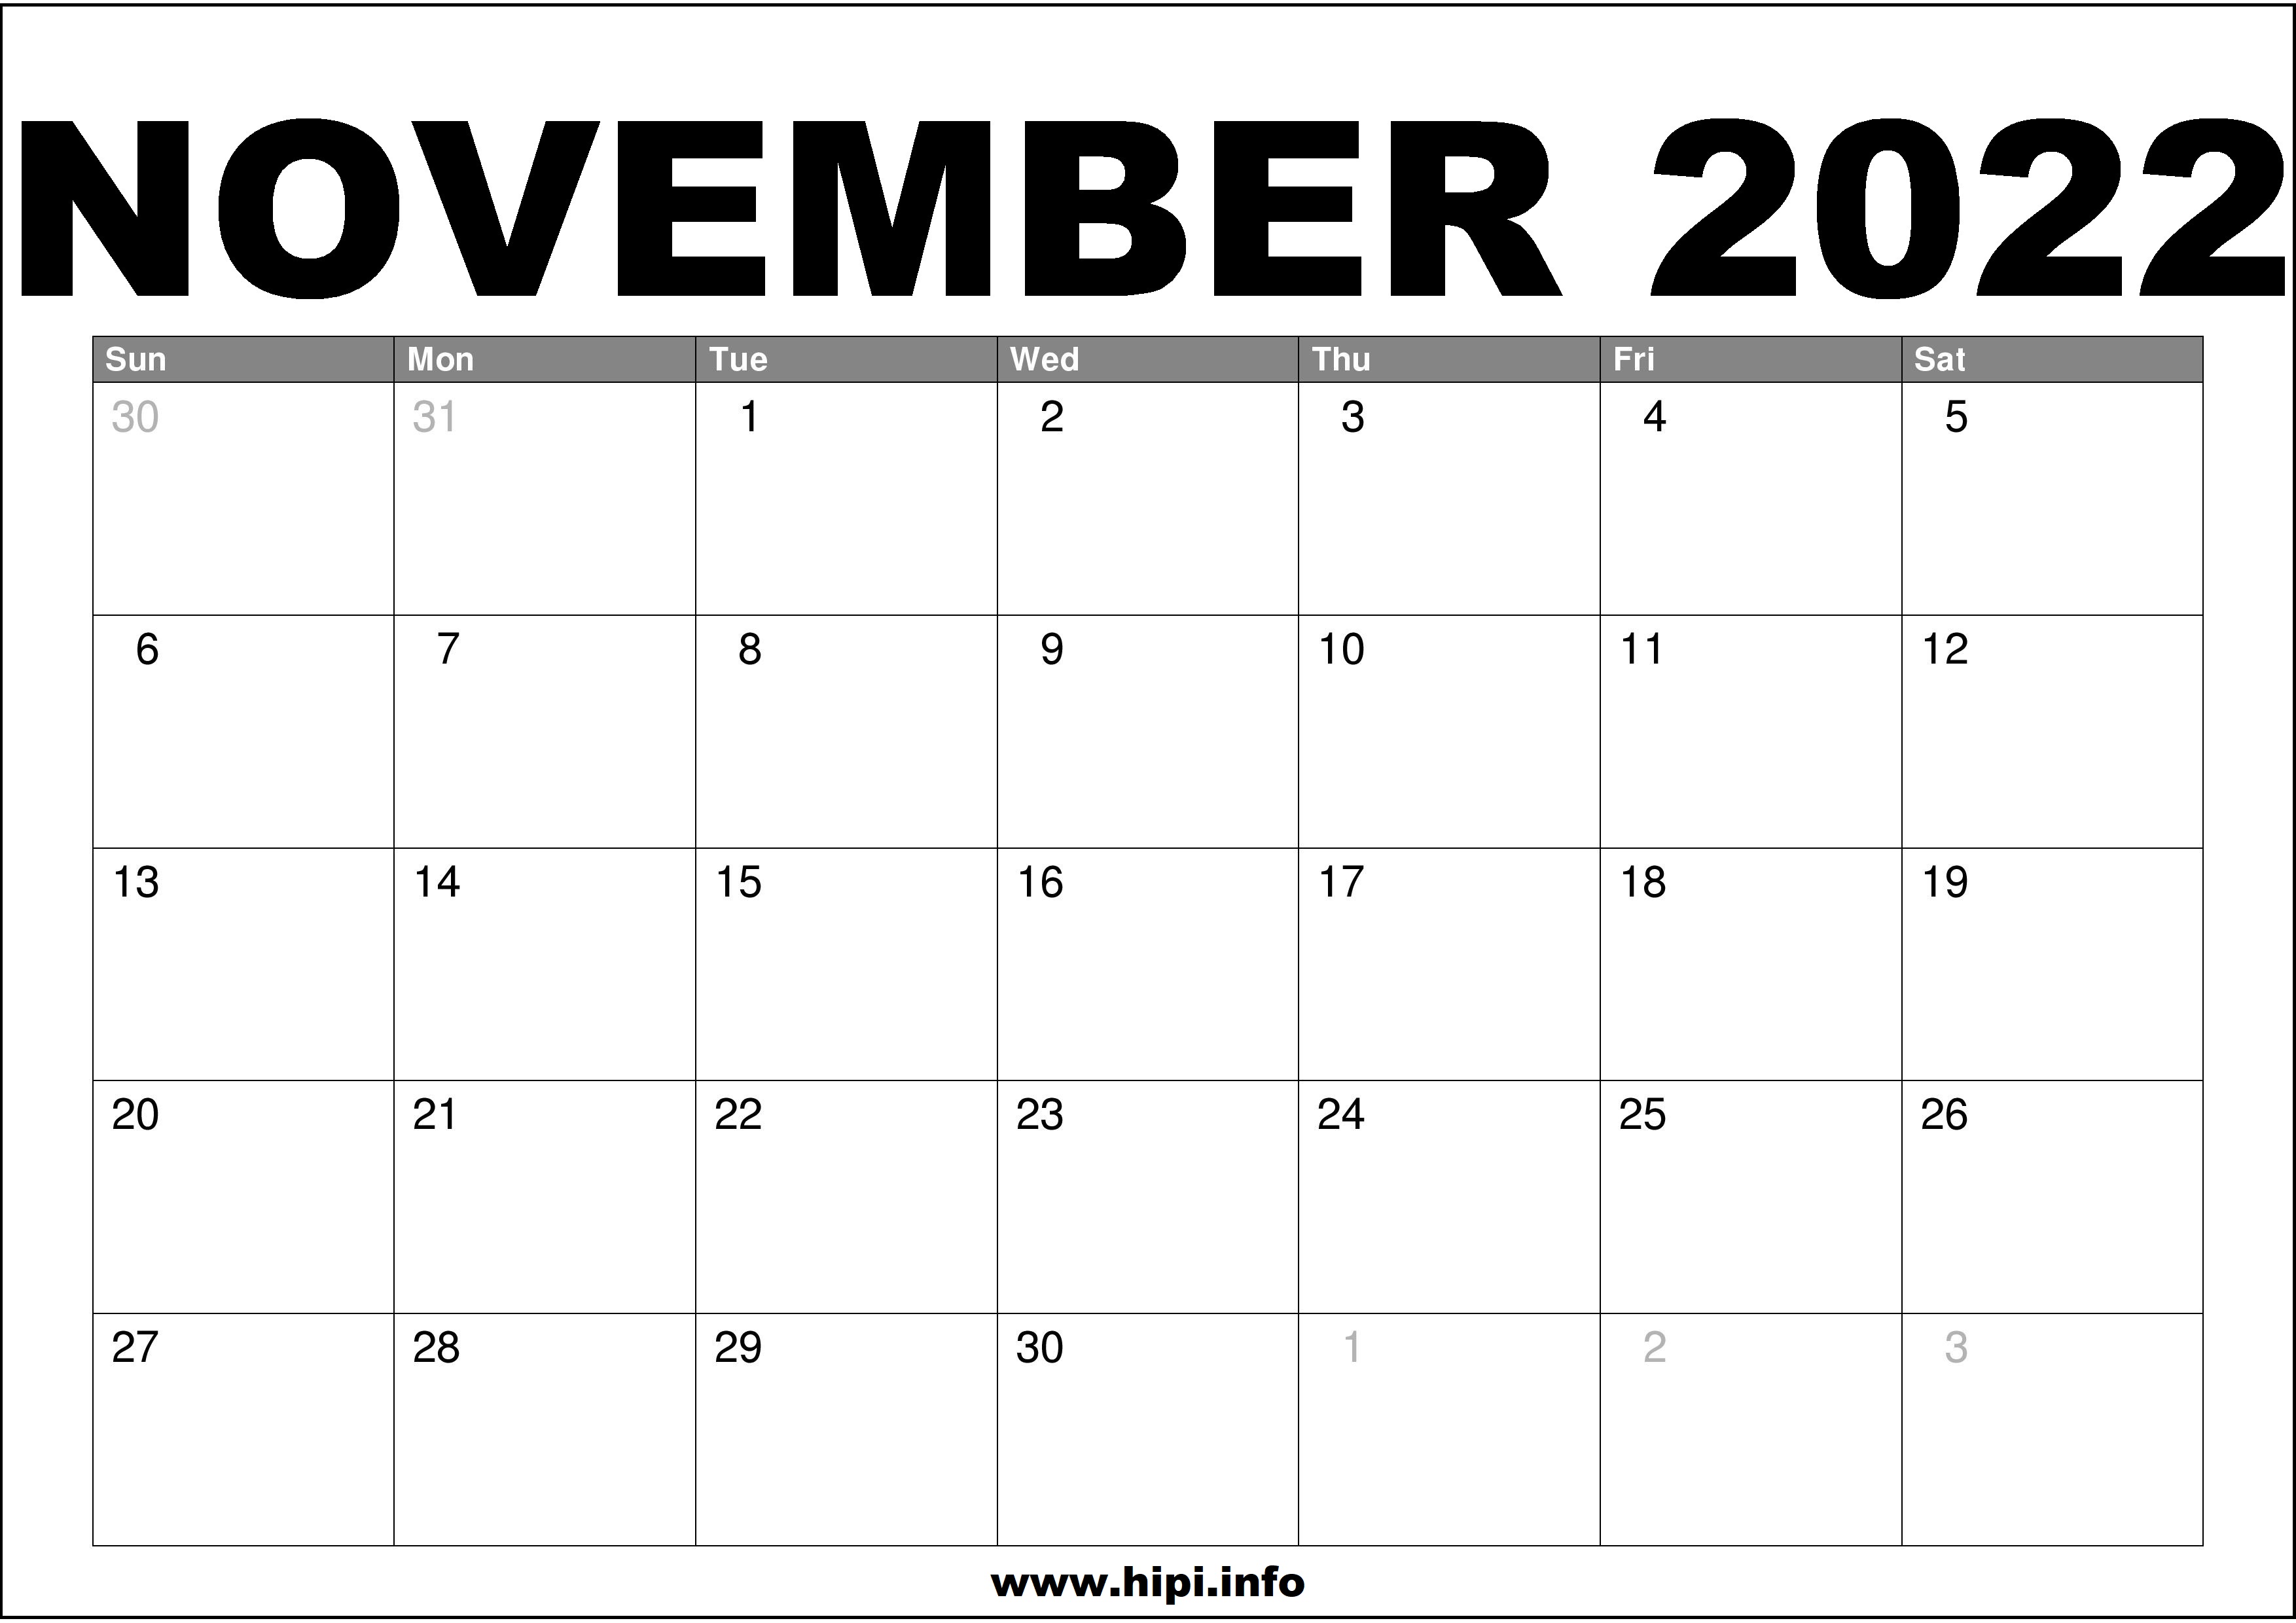 Nove 2022 Calendar November 2022 Calendar Printable Free - Hipi.info | Calendars Printable Free